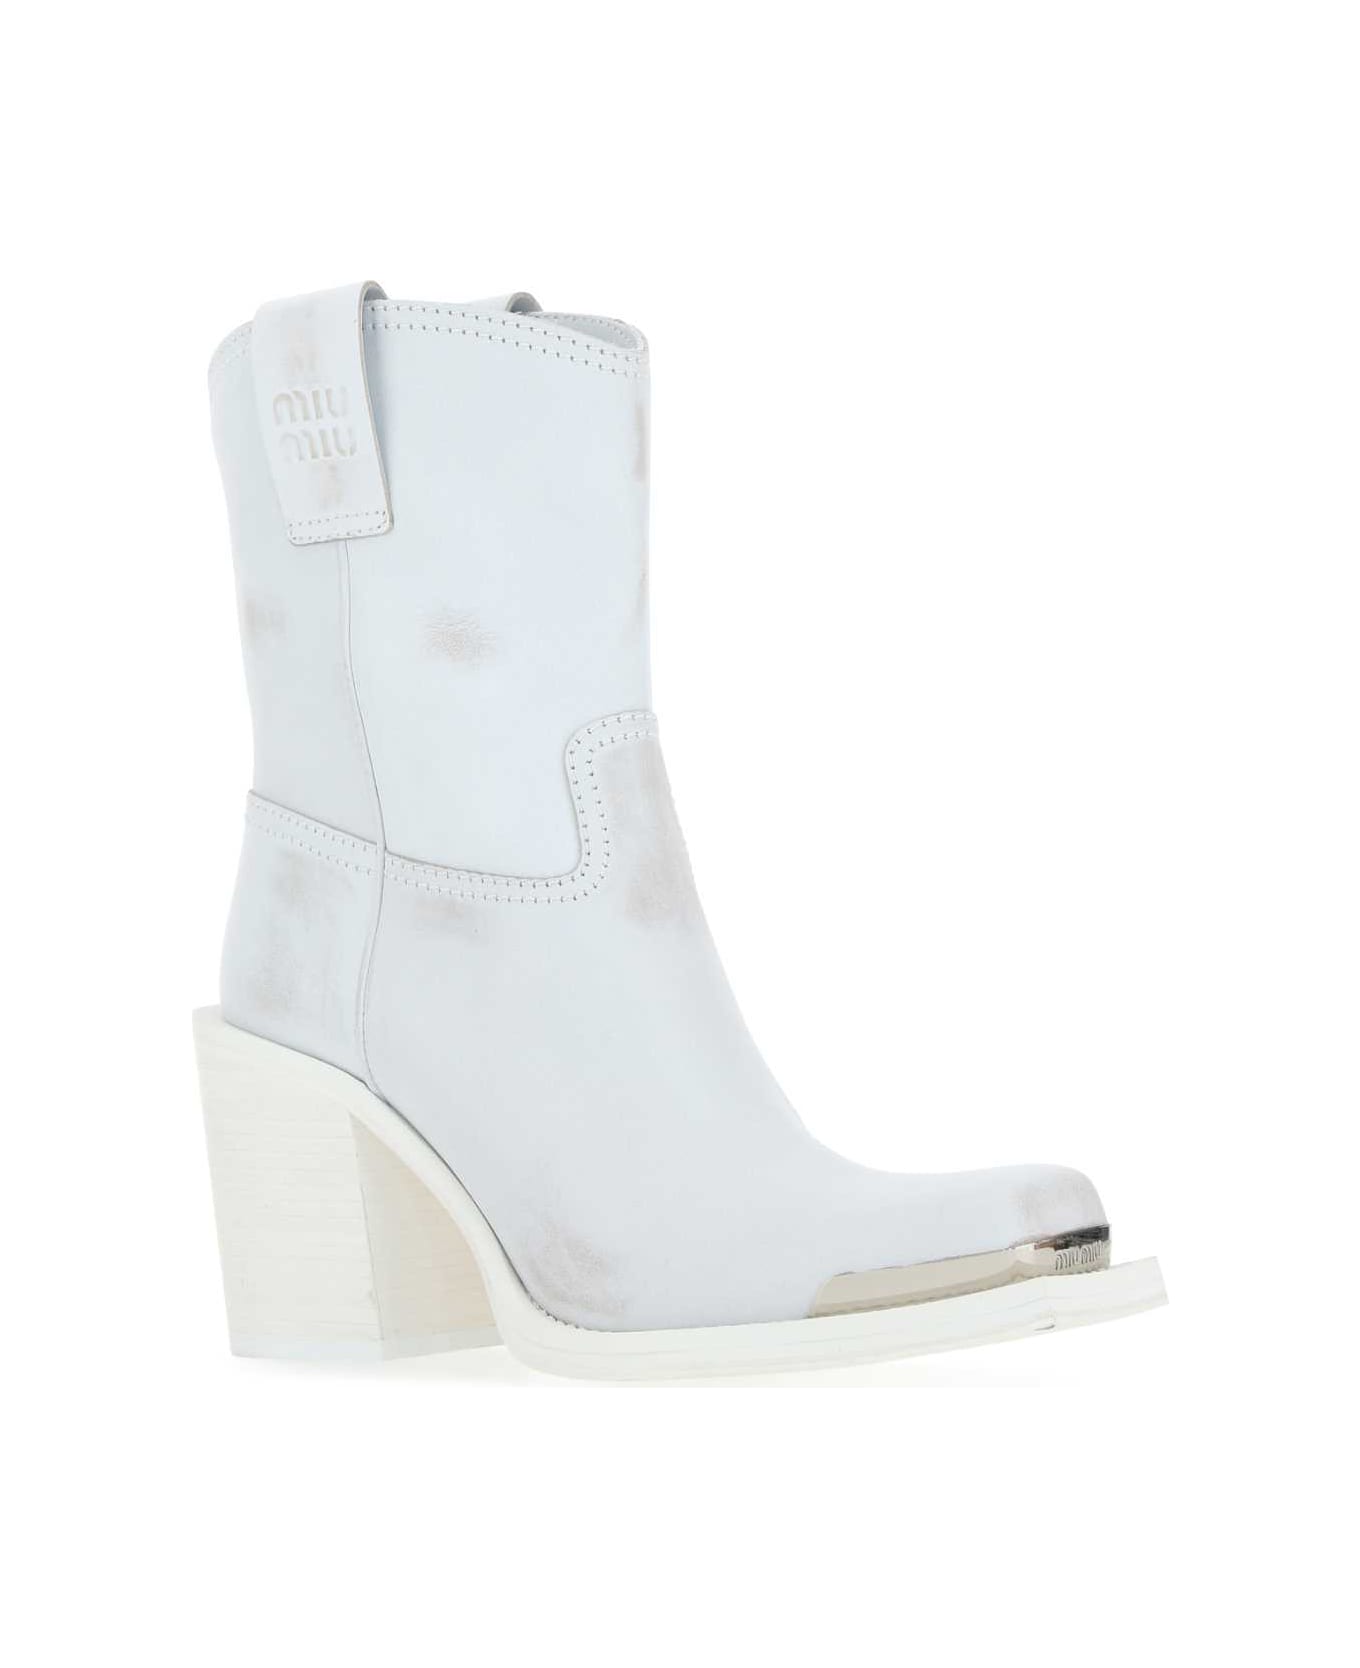 Miu Miu White Leather Ankle Boots - White